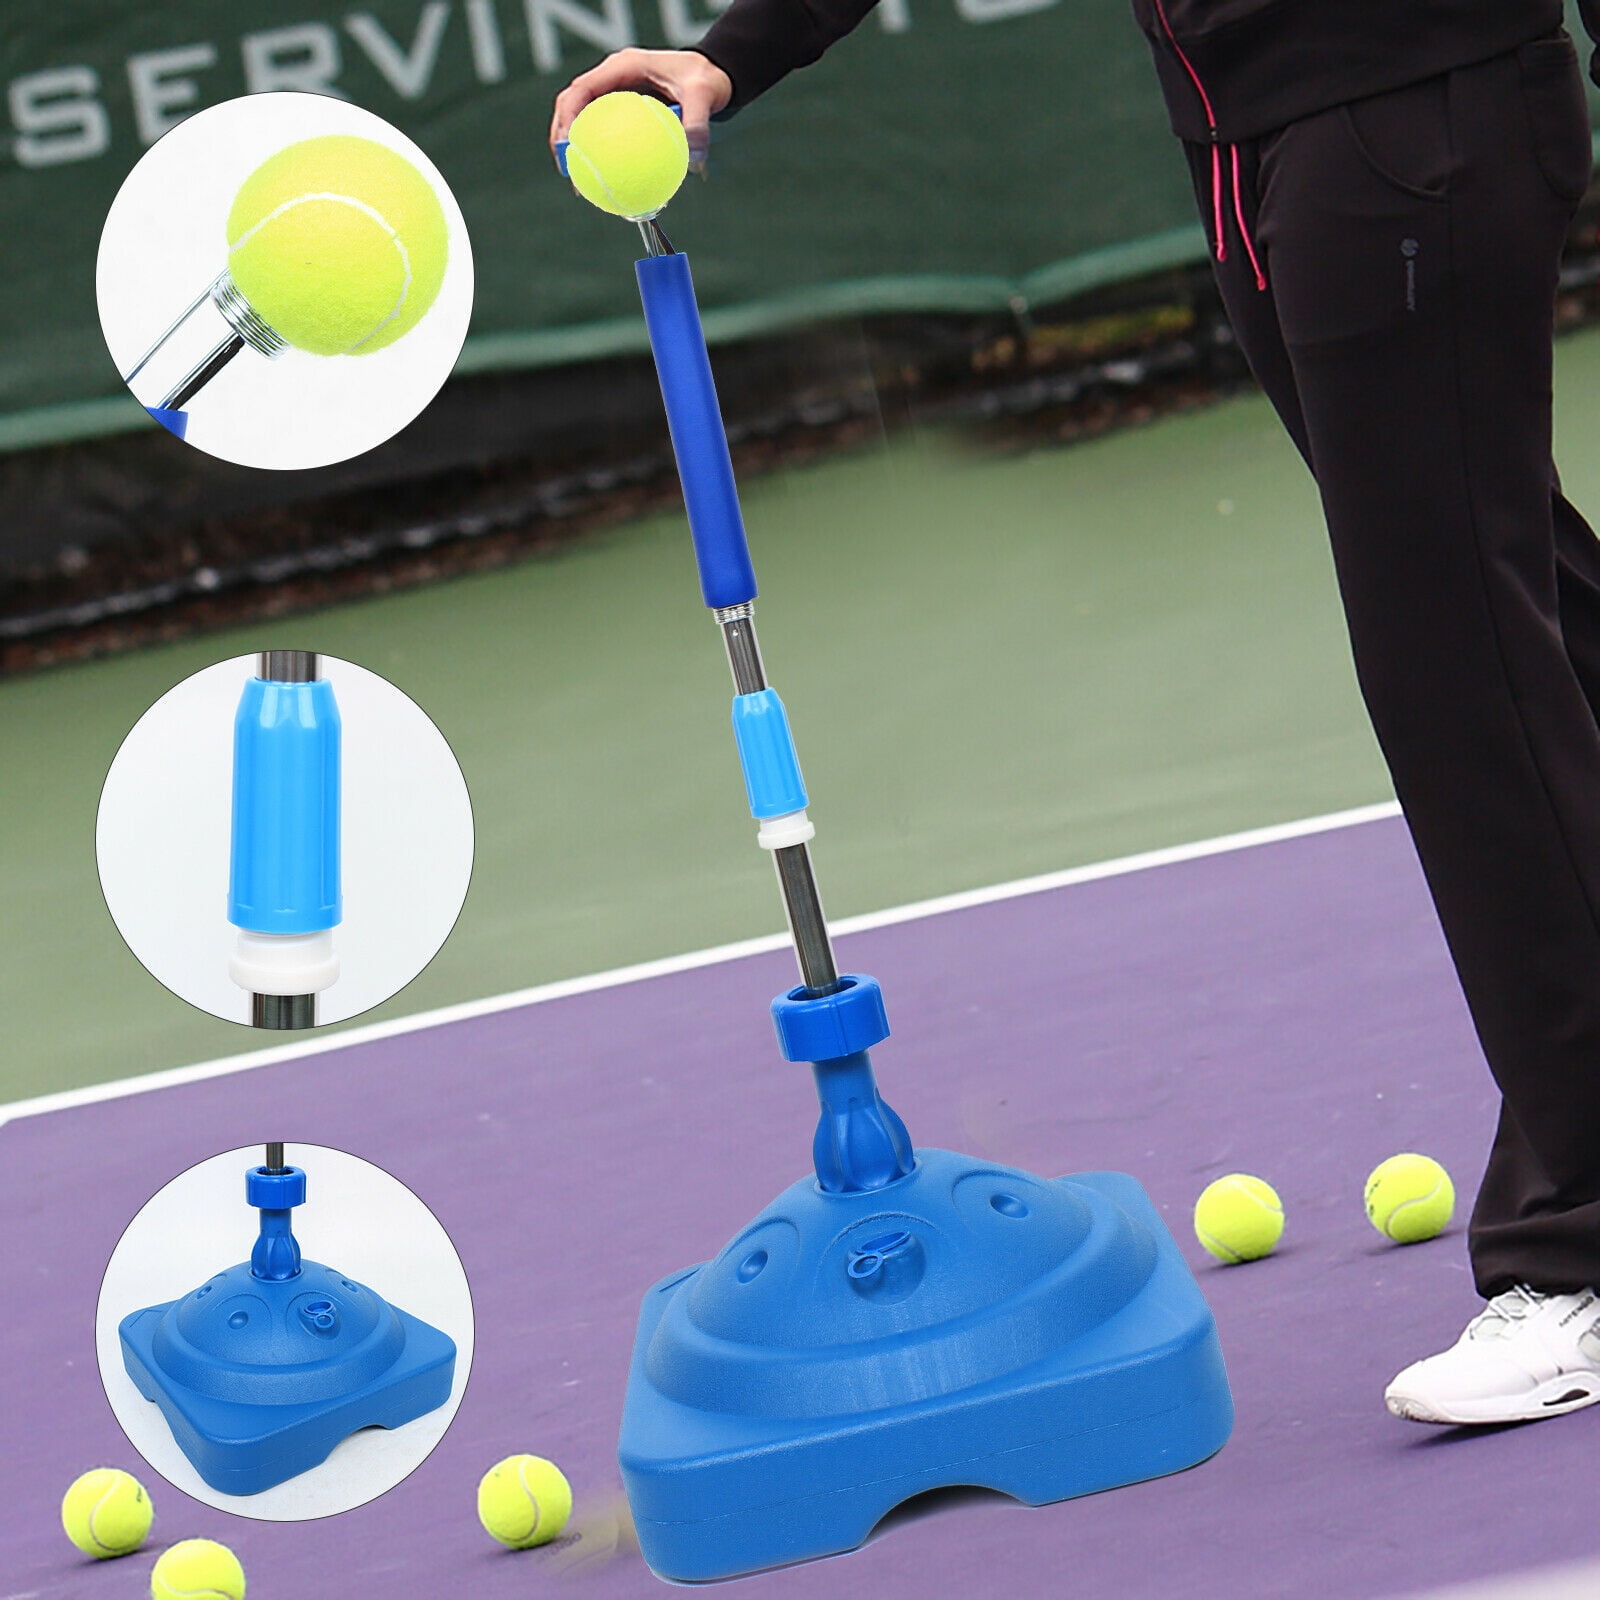 Tennis Training Device Portable Tennis Trainer Fixed Swing Racket Practice Height Adjustable Professional Swing Ball Machine Self-Training Tennis Equipment 